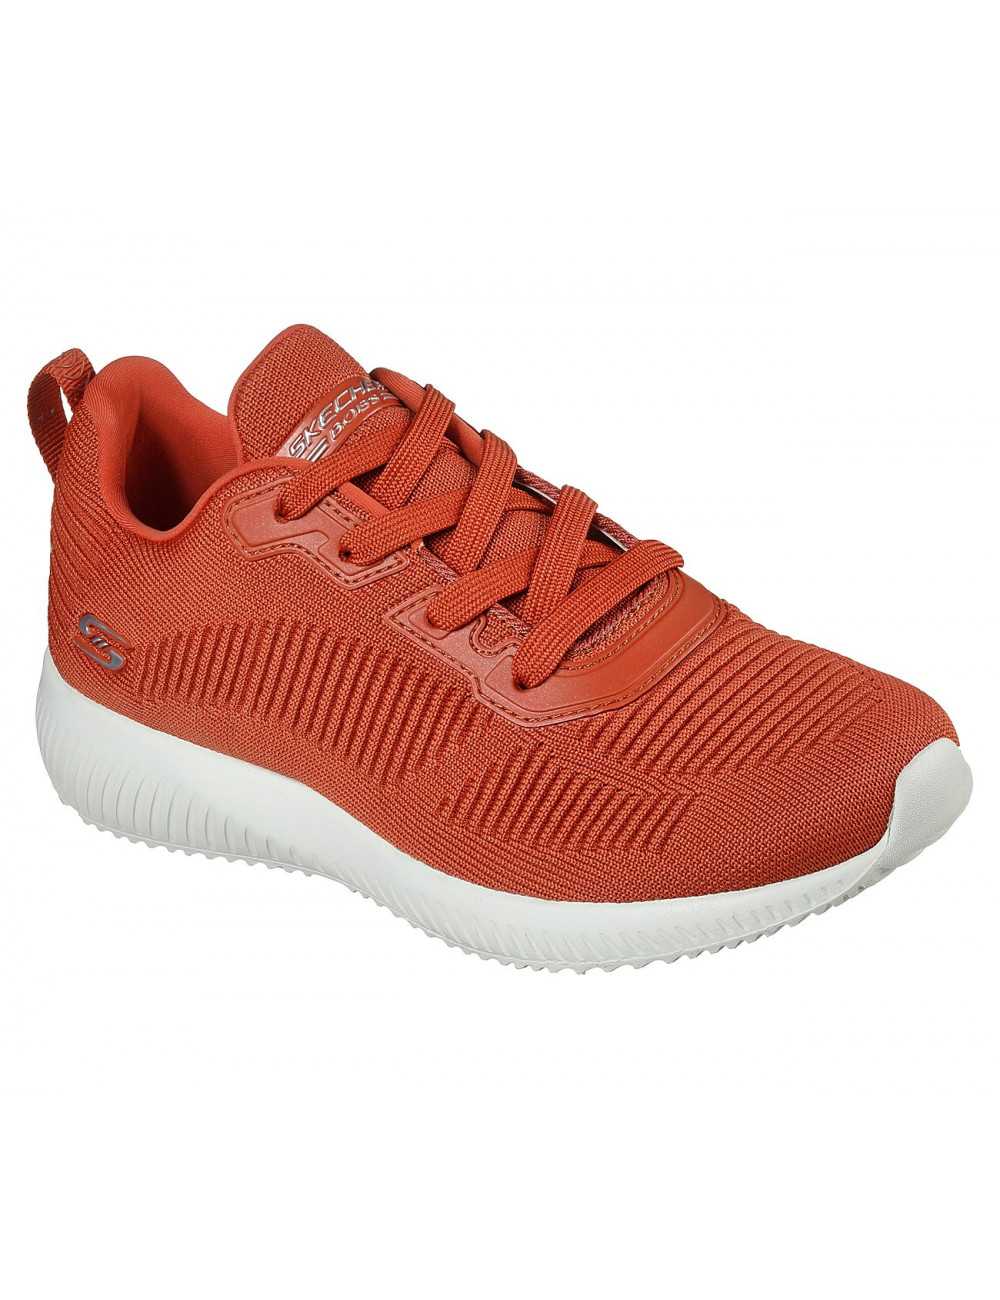 Zapatillas mujer Rojo | Skechers (32504)